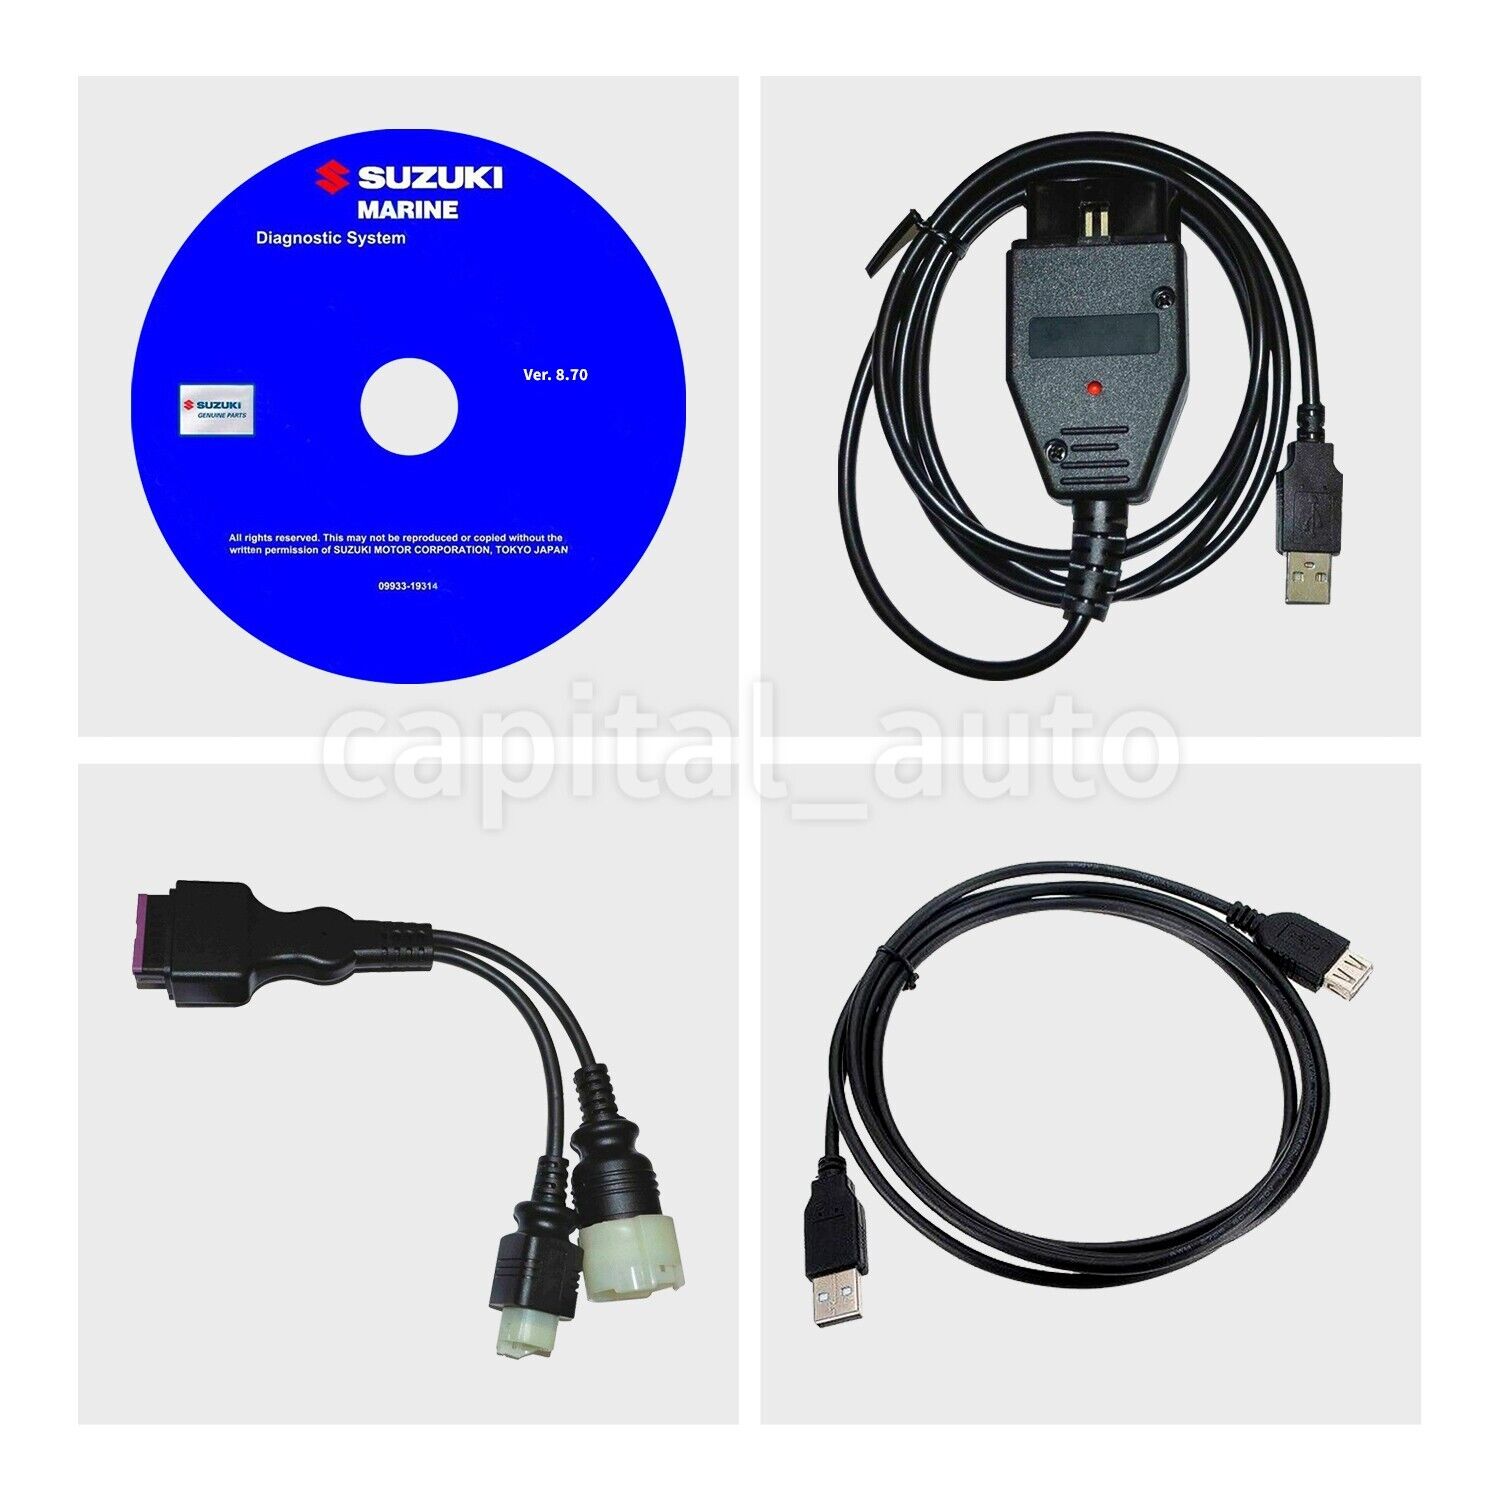 For Suzuki Outboard Boat Marine Diagnostic USB Cable Kit SDS 8.70